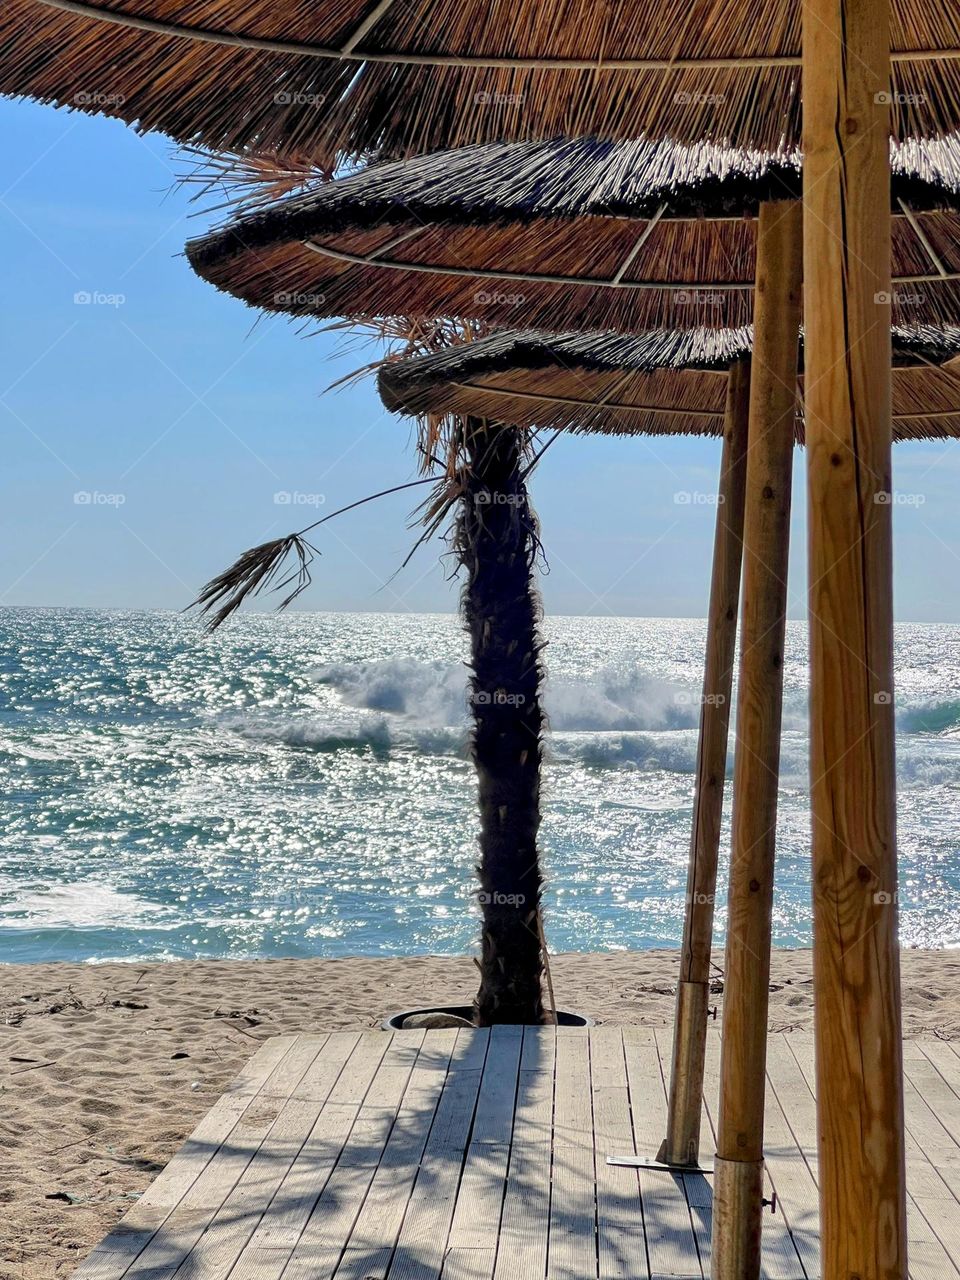 Thatch umbrella by the ocean